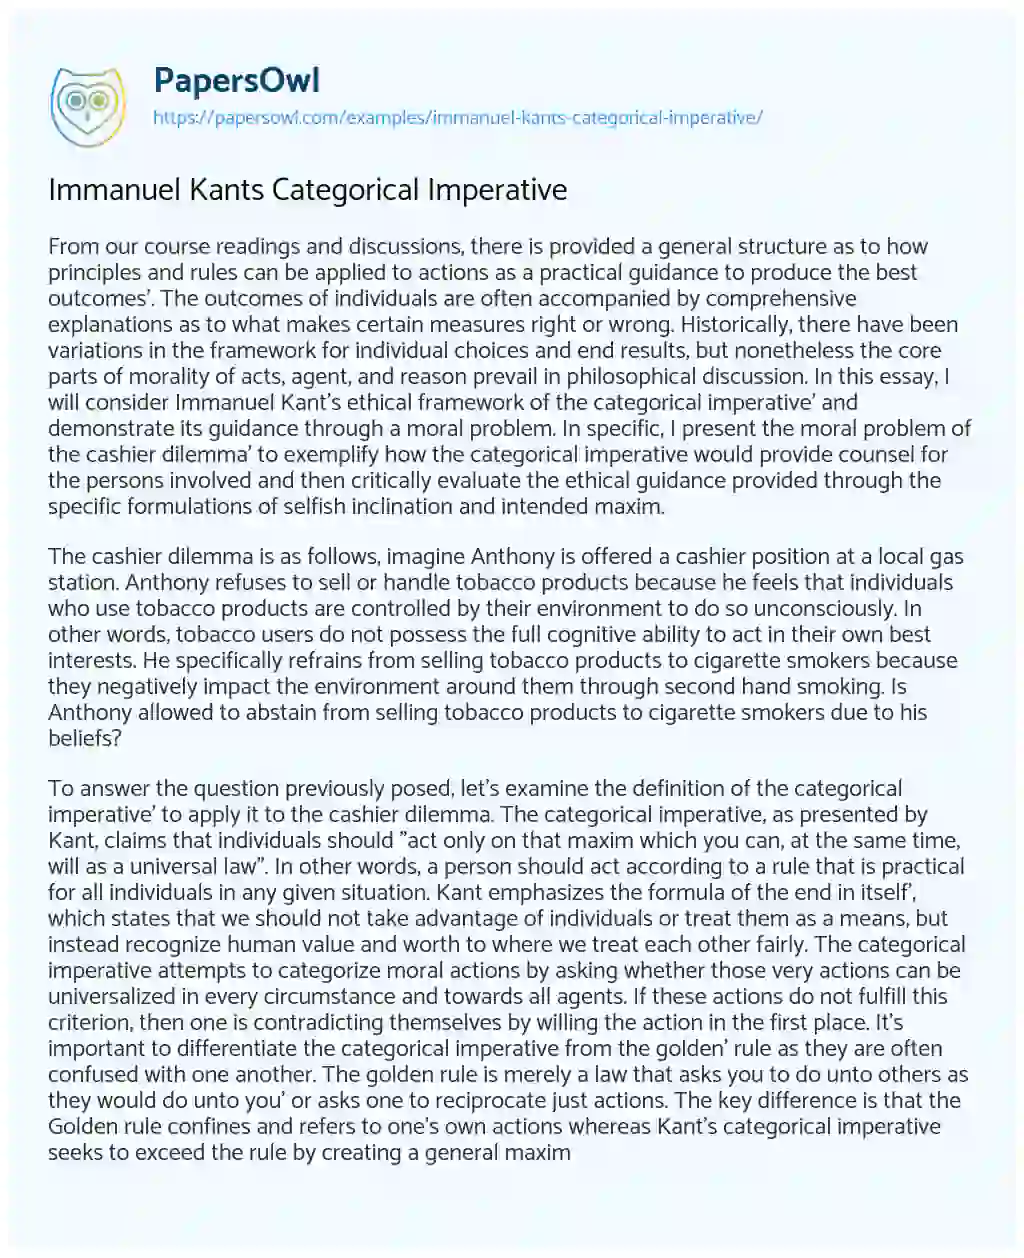 Immanuel Kants Categorical Imperative essay